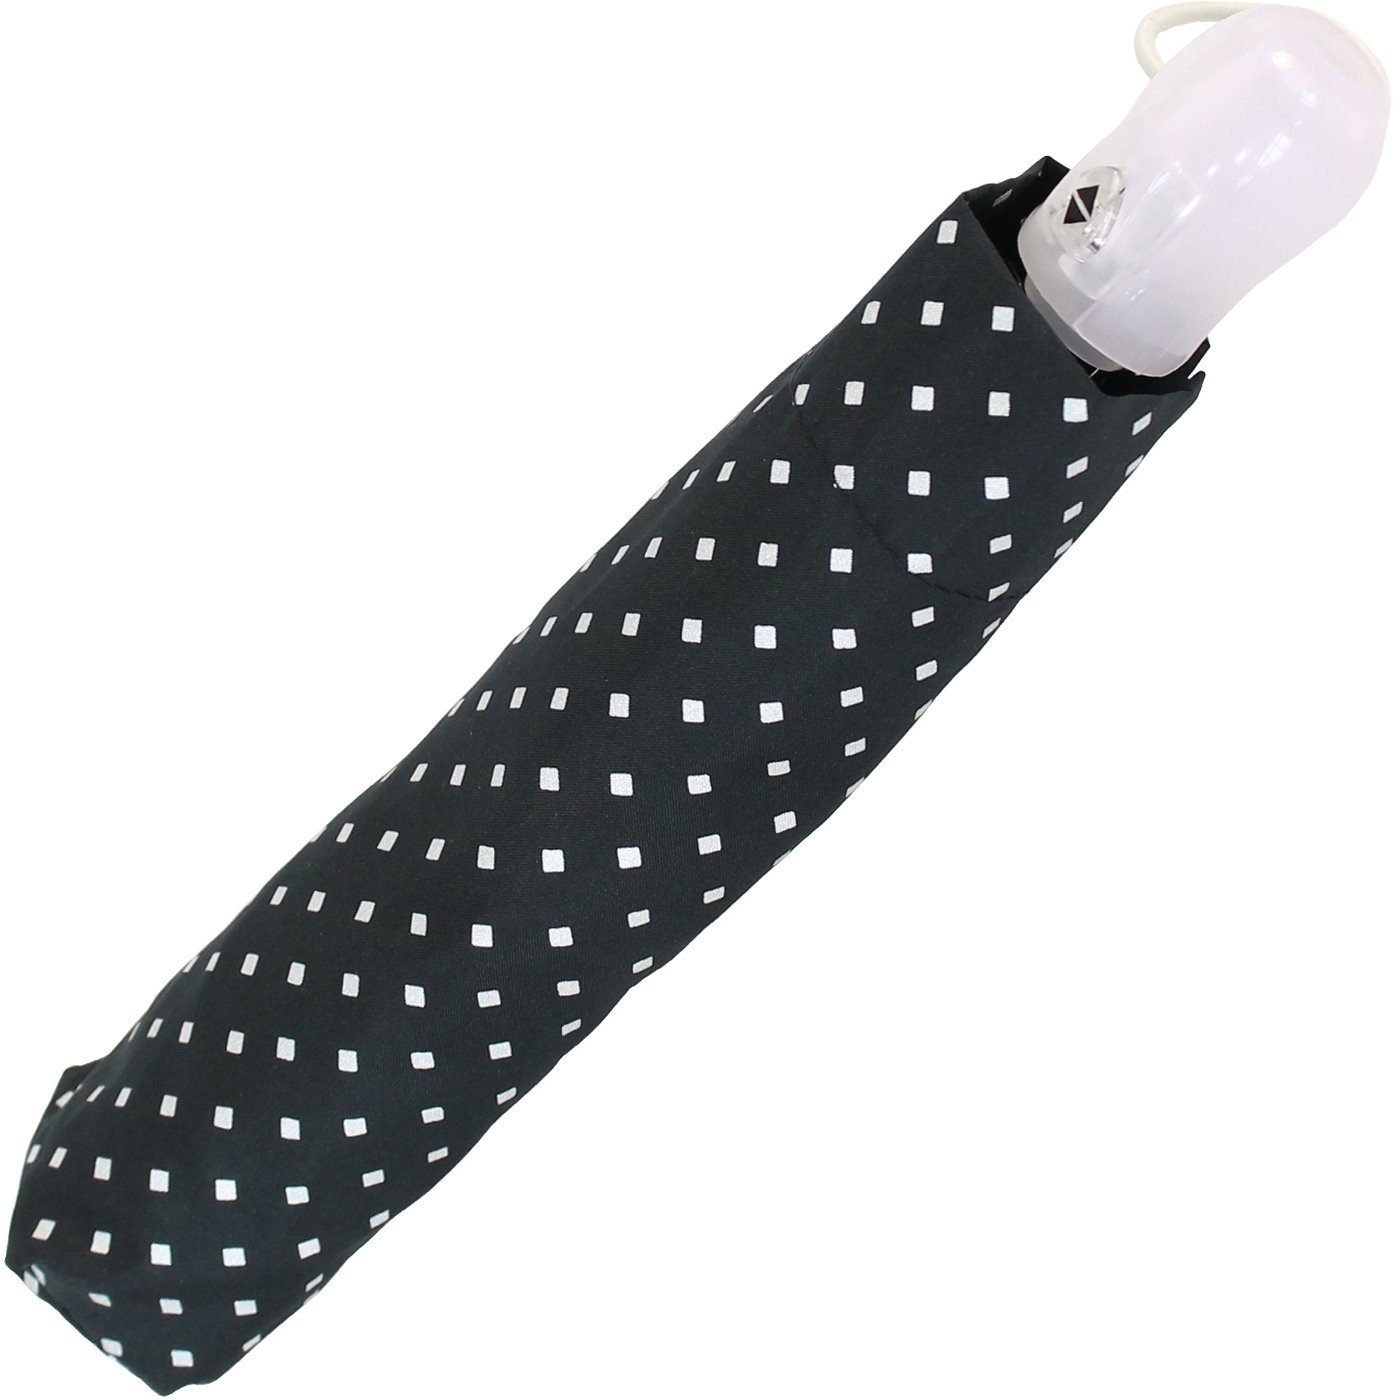 Automatik UV-sensitiv, UV-sensitiv gepunktet Griff Taschenregenschirm Schirm iX-brella Mini